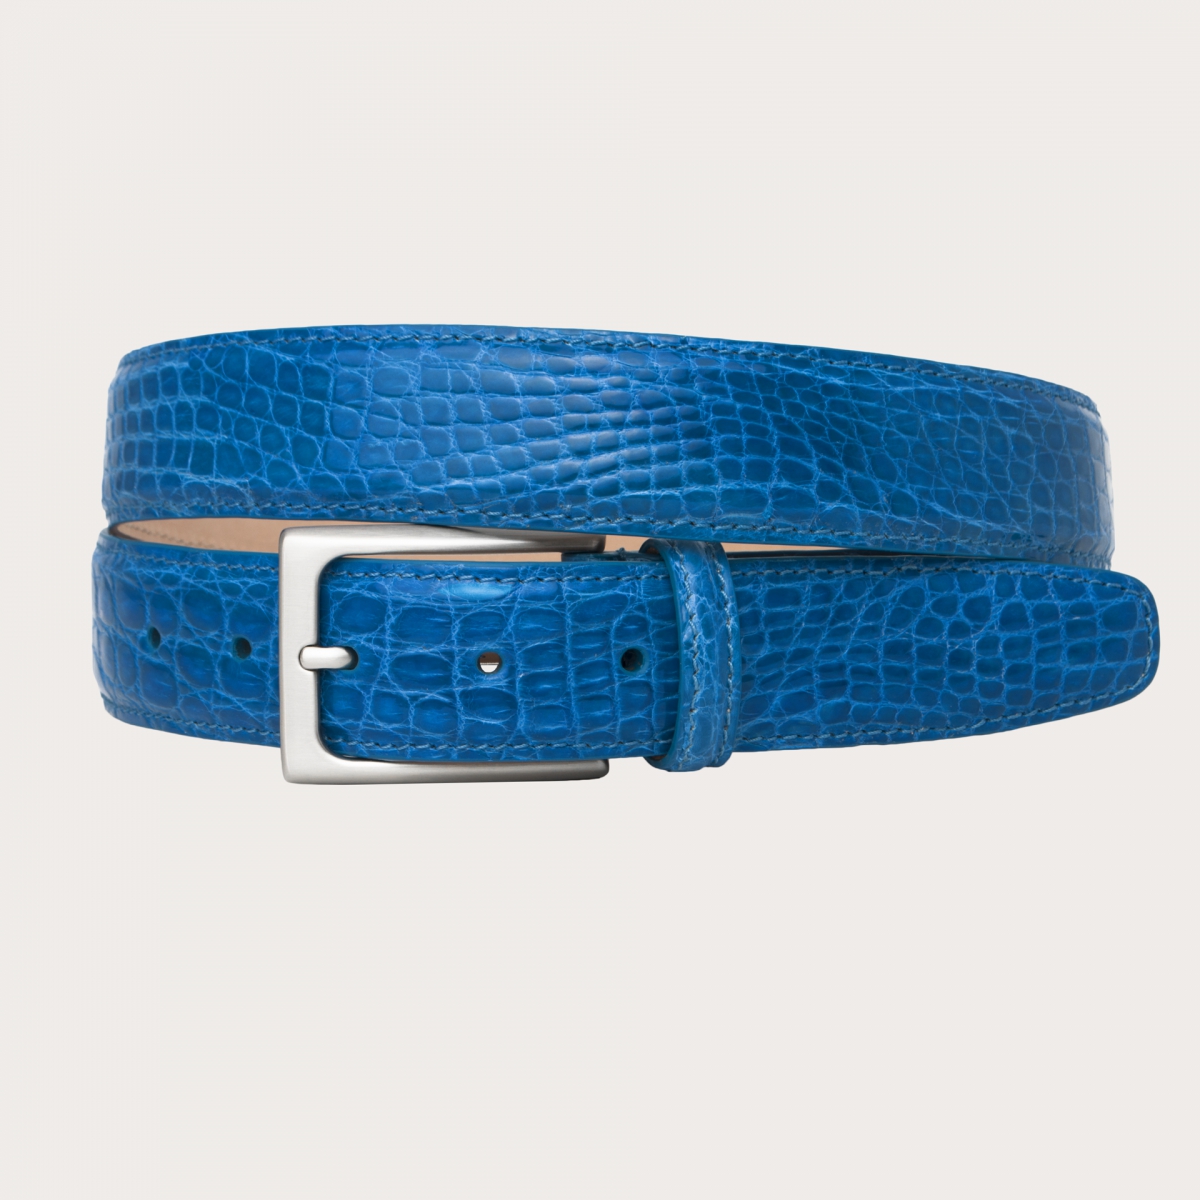 BRUCLE Crocodile leather belt in light blue